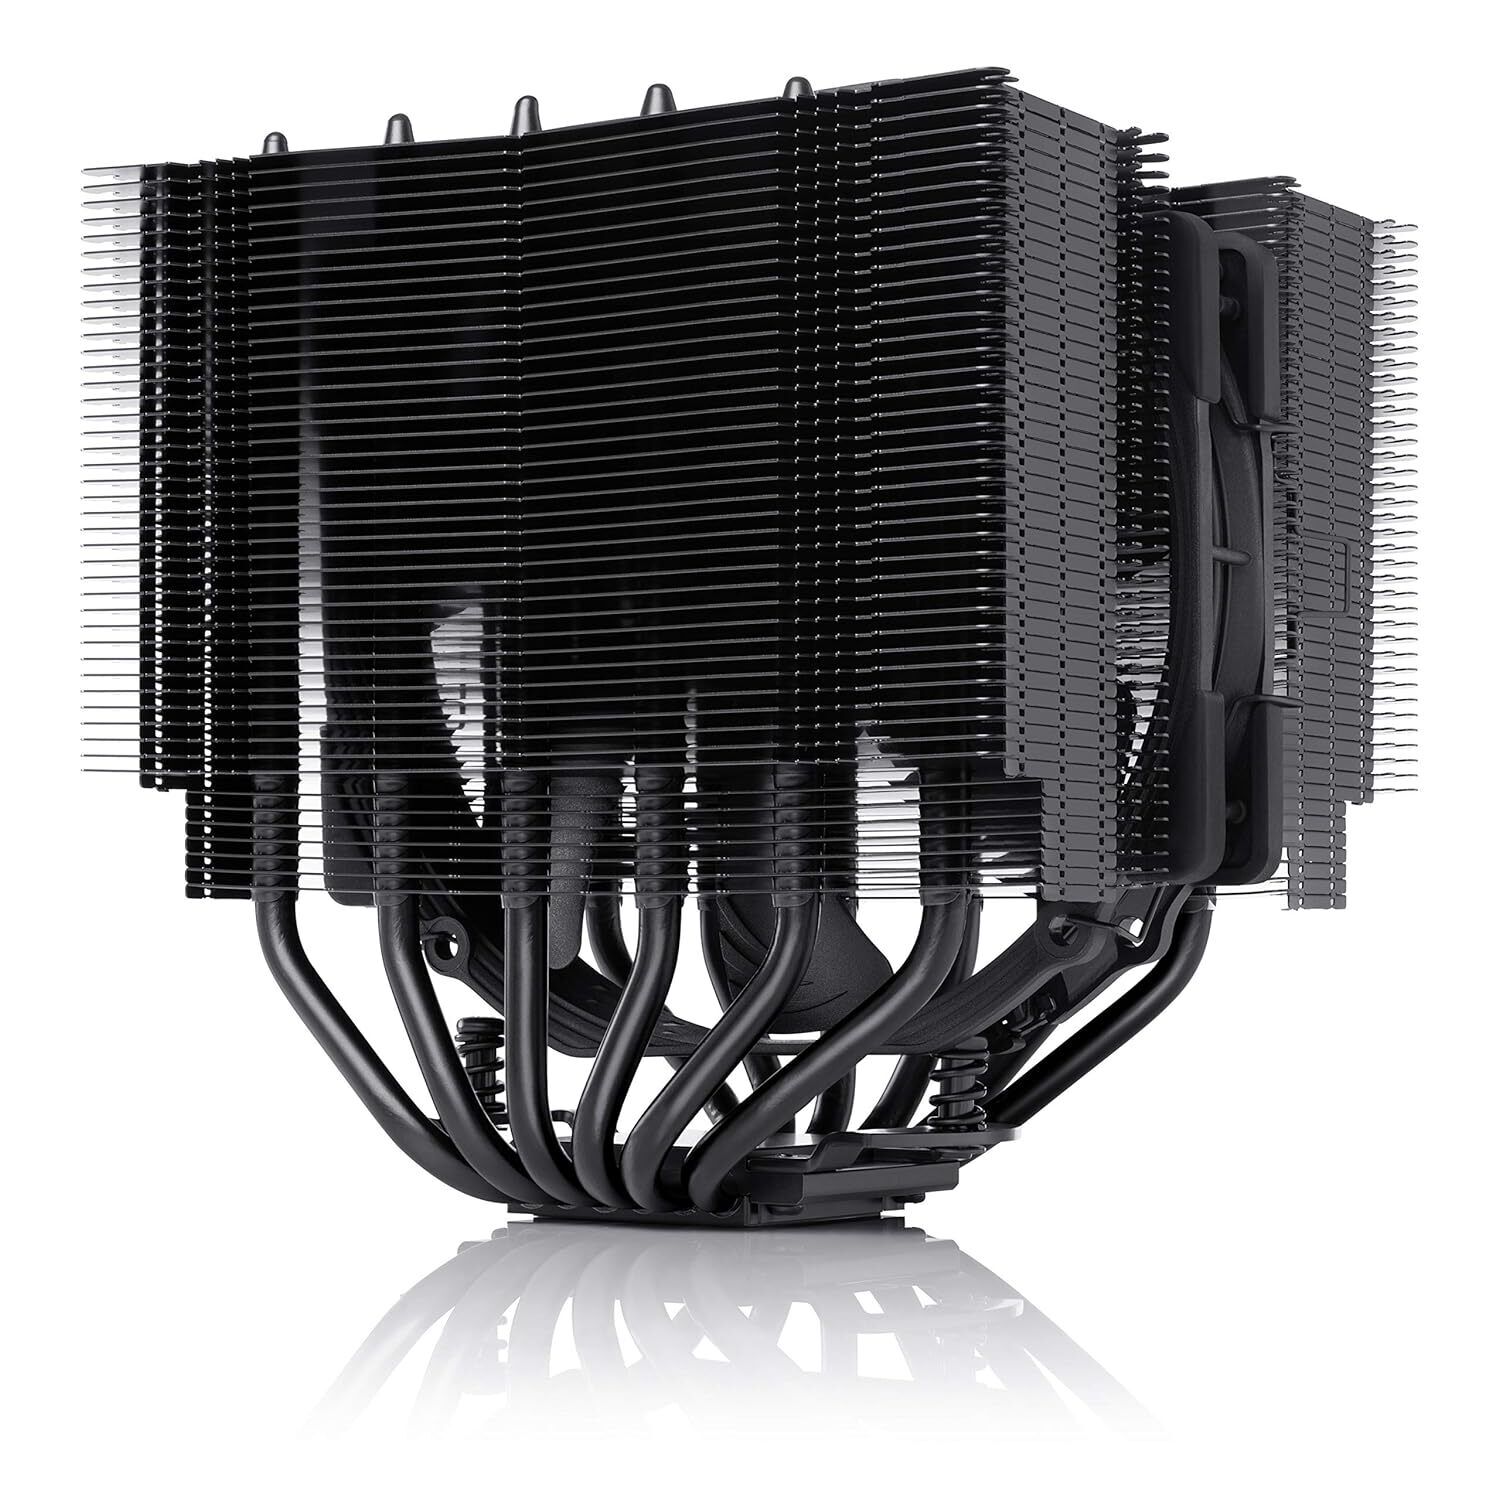 Noctua NH-D15S chromax.Black, Premium Dual-Tower CPU Cooler with NF-A15 PWM 14